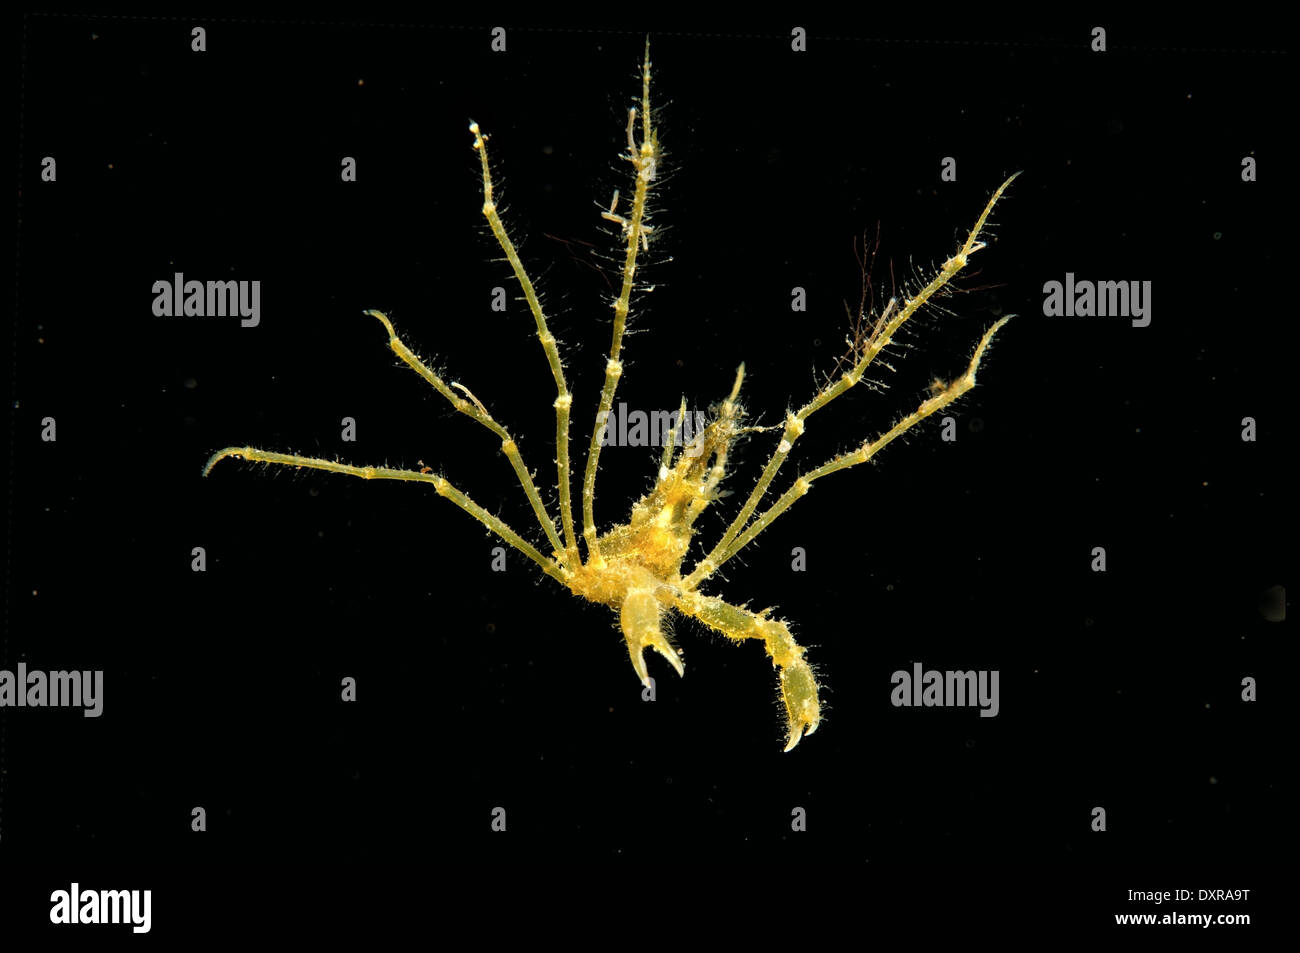 common spider crab, long-legged spider crab or long-legged crab (Macropodia rostrata) Stock Photo